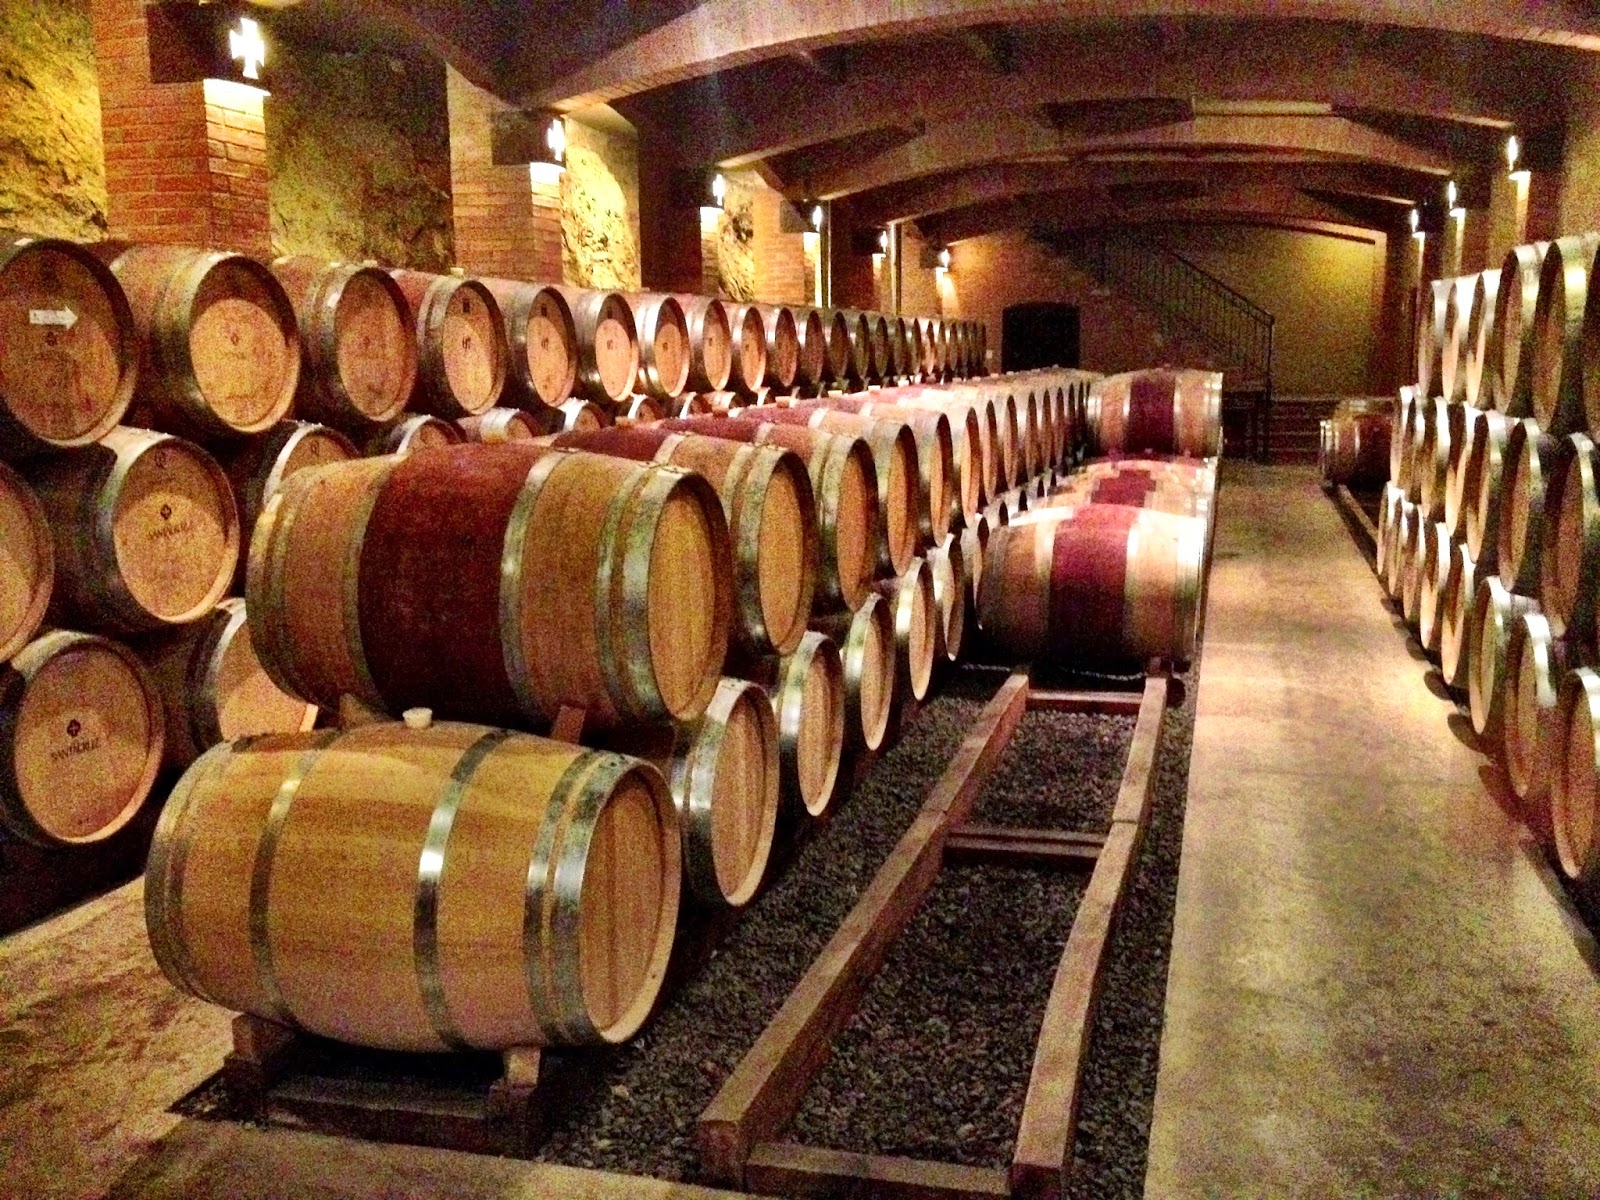 Santa Cruz winery - wine barrels galore!